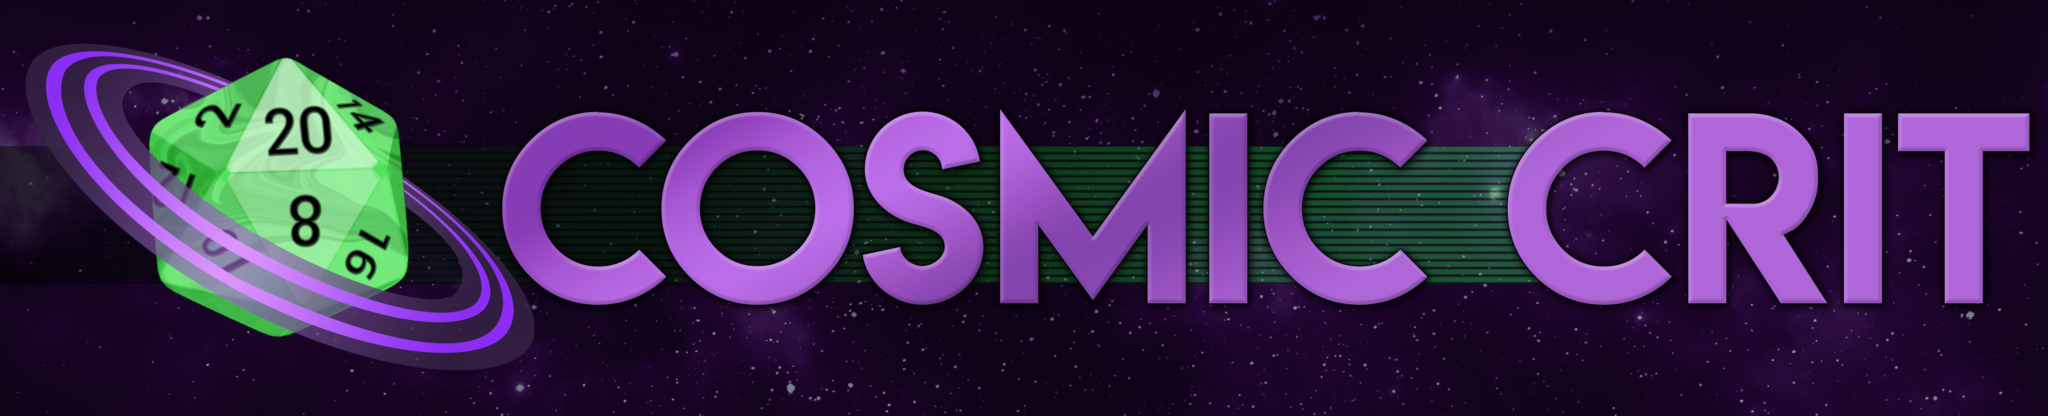 Cosmic Crit Podcast Logo Site Header